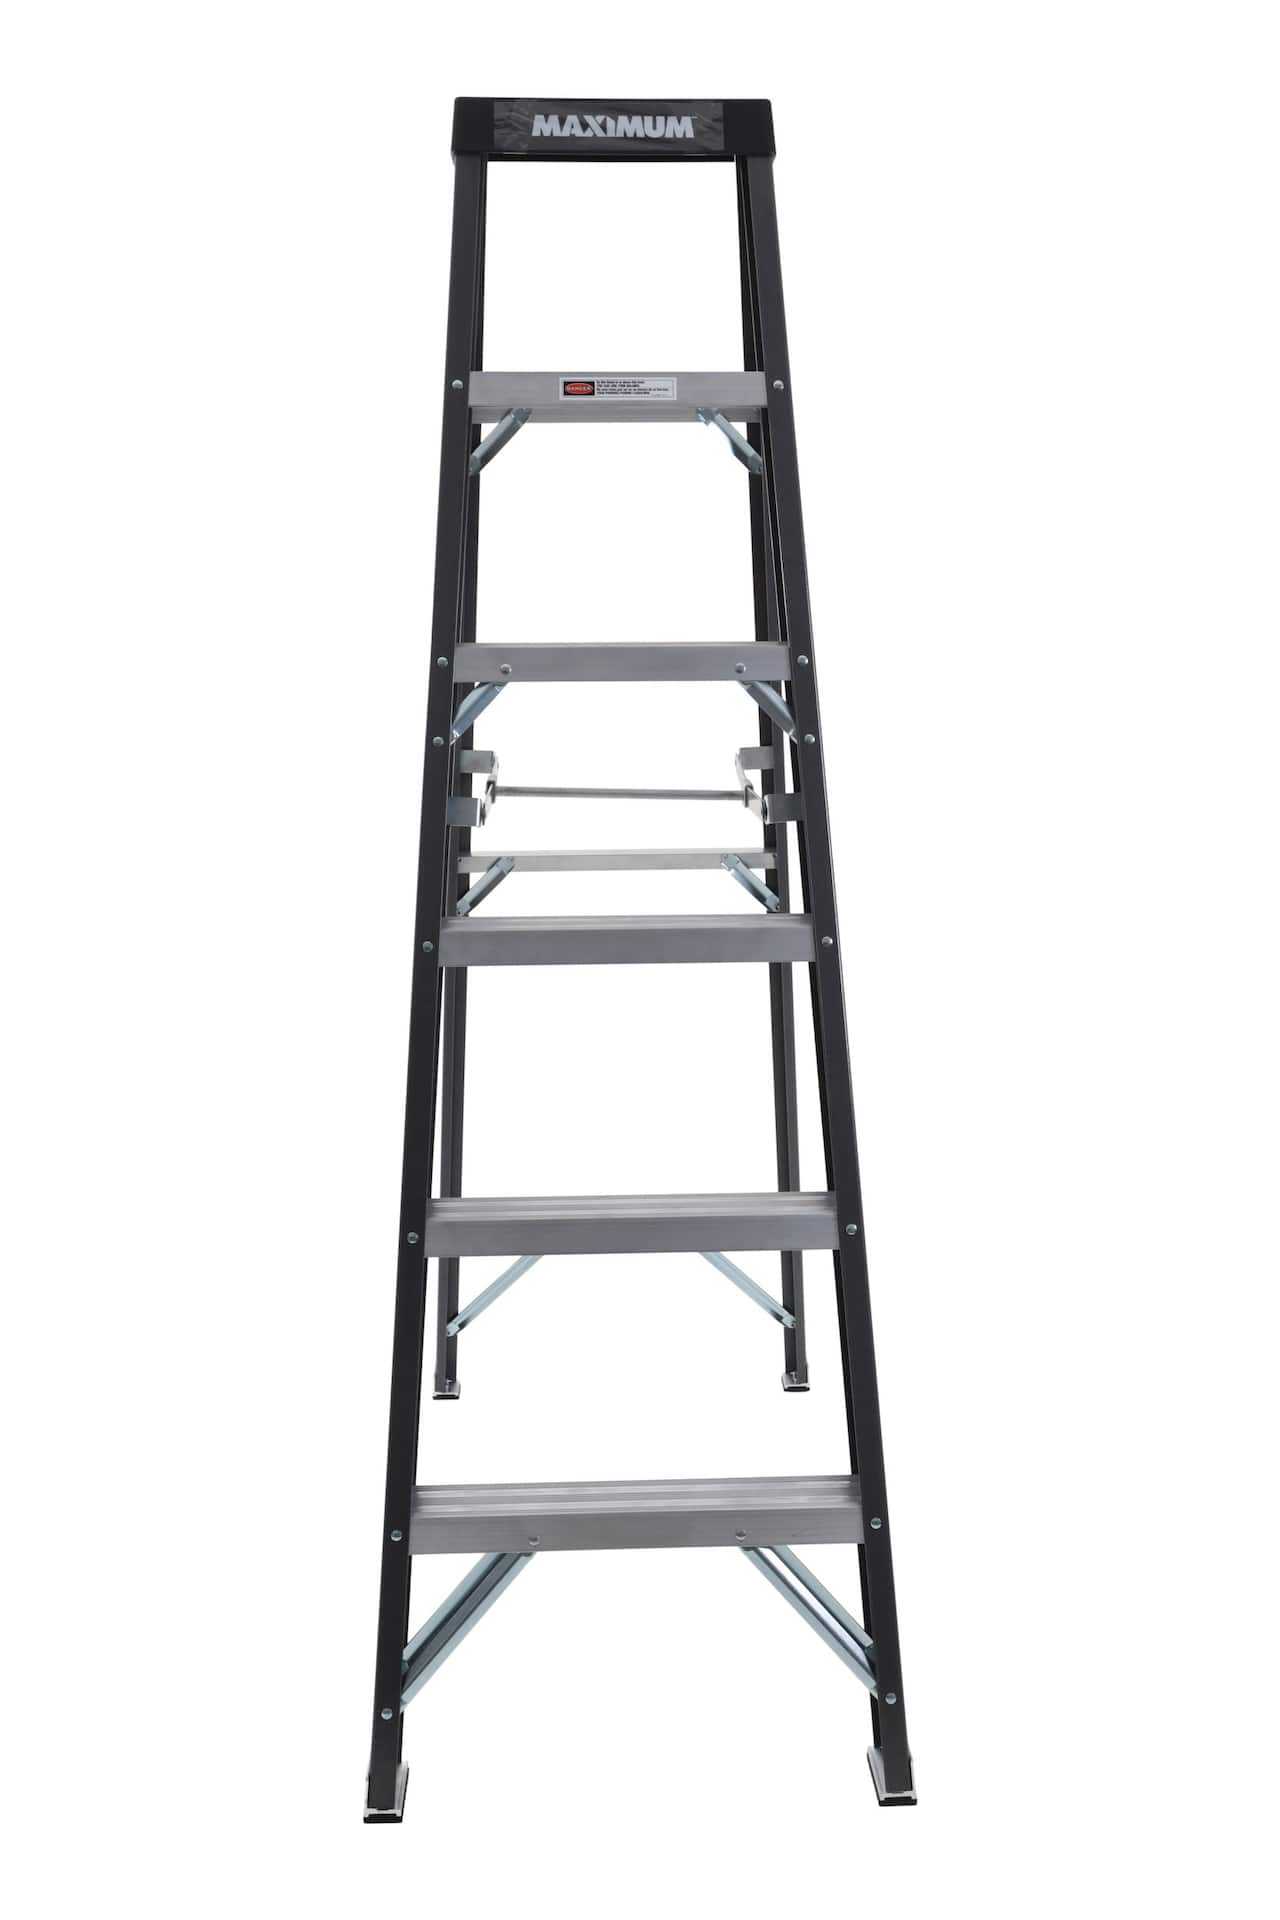 1 Ladder Lock Organizational Netting Products Manufacturer